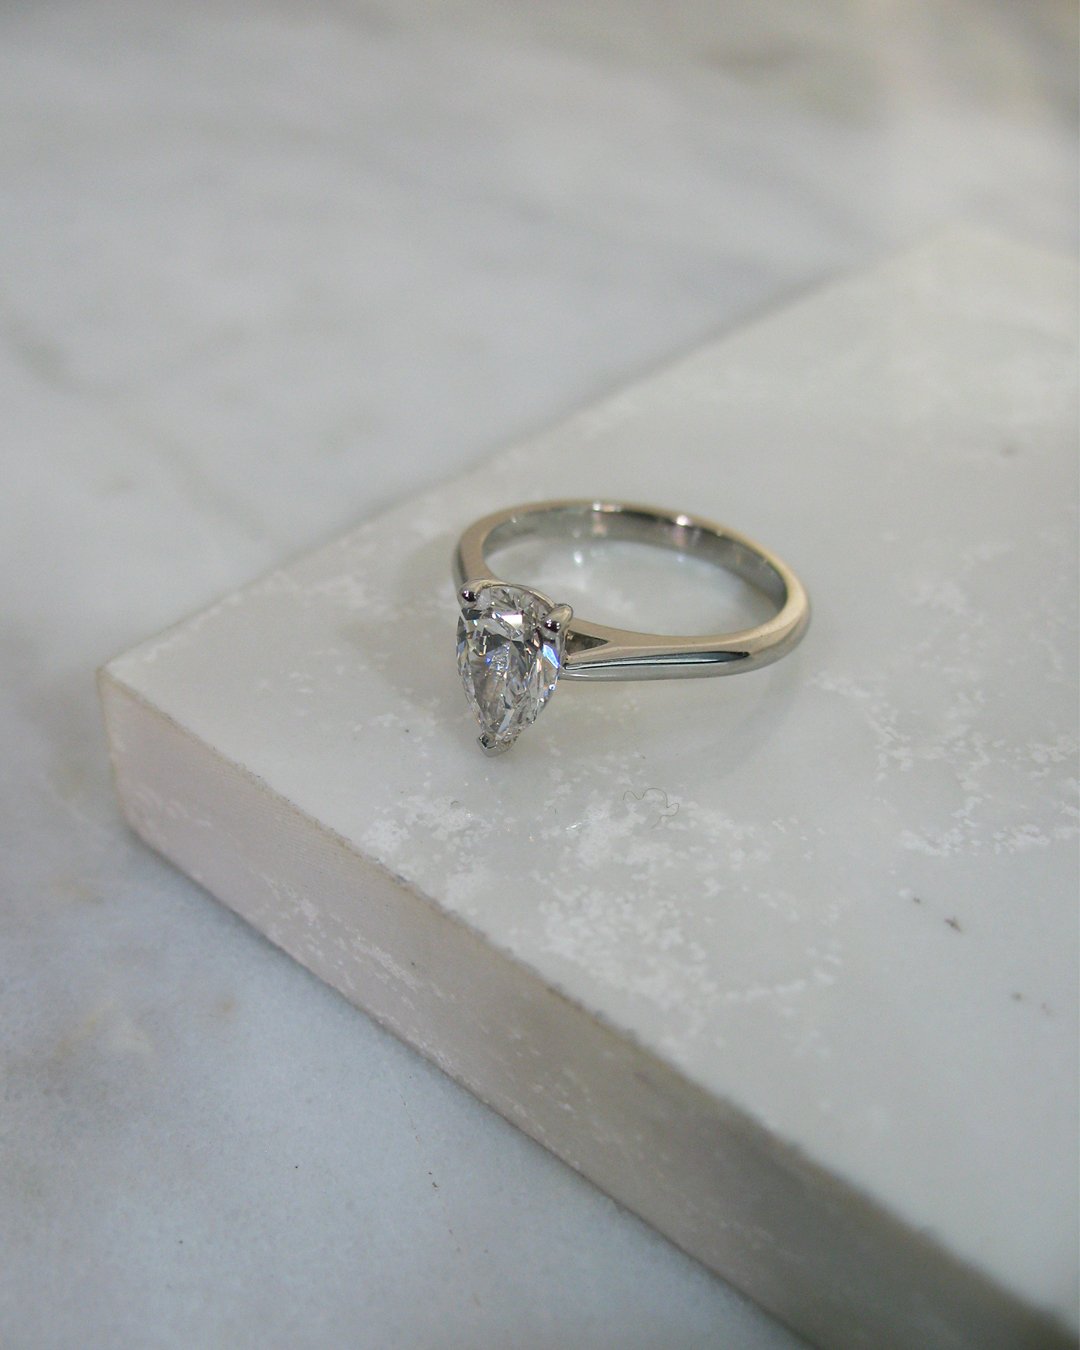  A pear shaped custom diamond engagement ring set in platinum